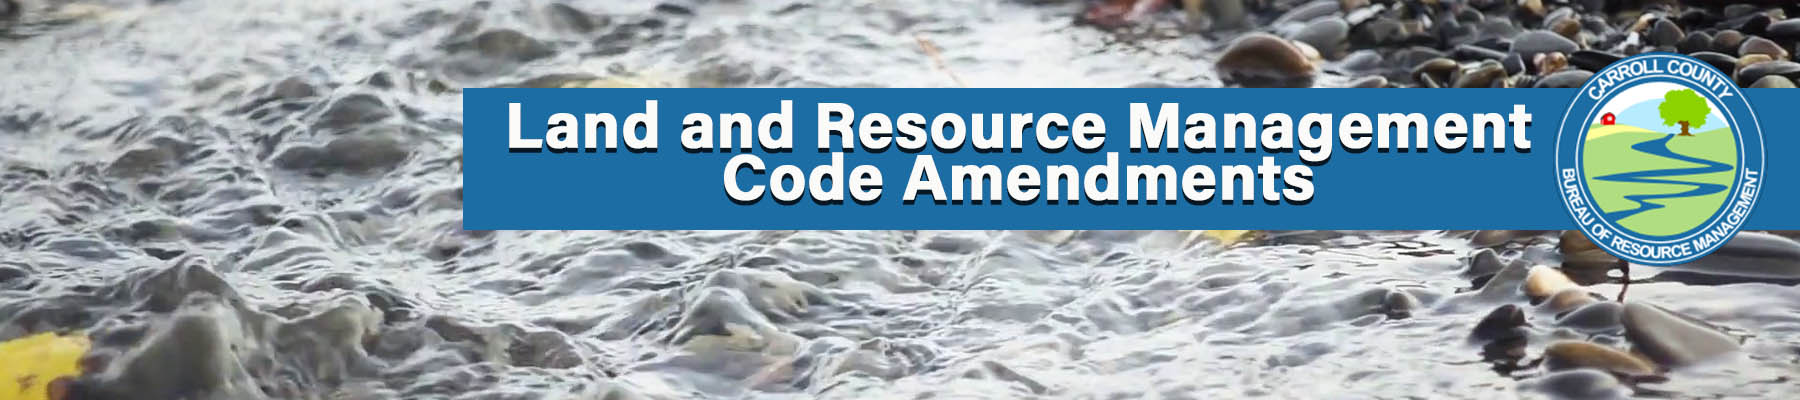 Proposed Environmental Code Amendments